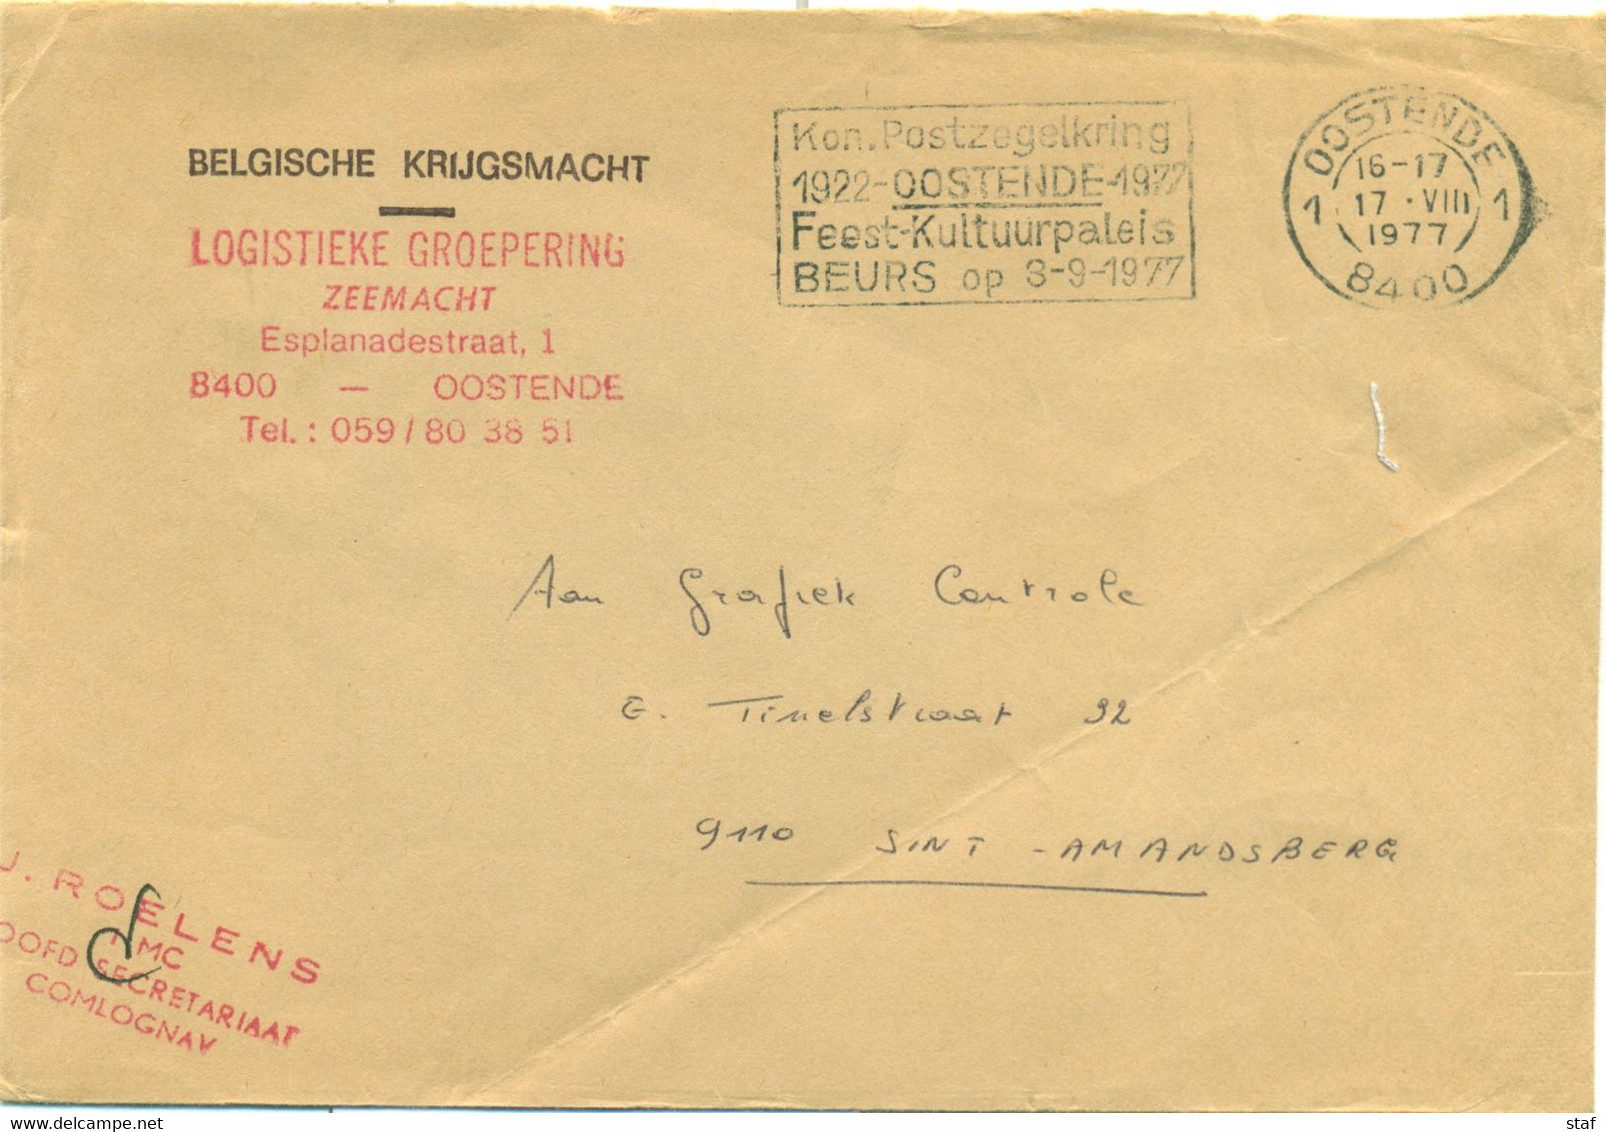 Kon. Postzegelkring Oostende 1922 - 1977 Feest-Kultuurpaleis Beurs Op 3-9-1977 - Targhette